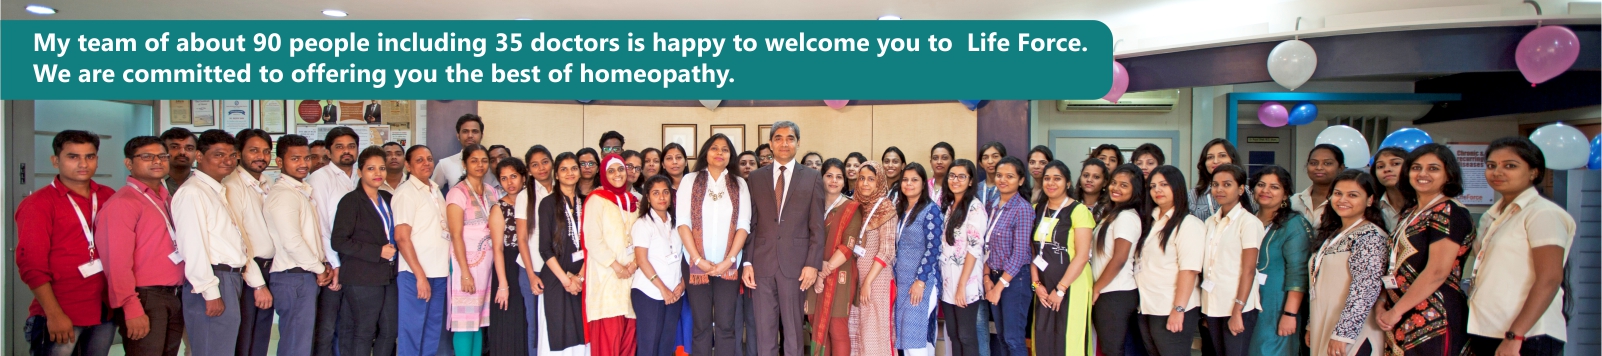 Dr. Rajesh Shah Homeopathy clinic